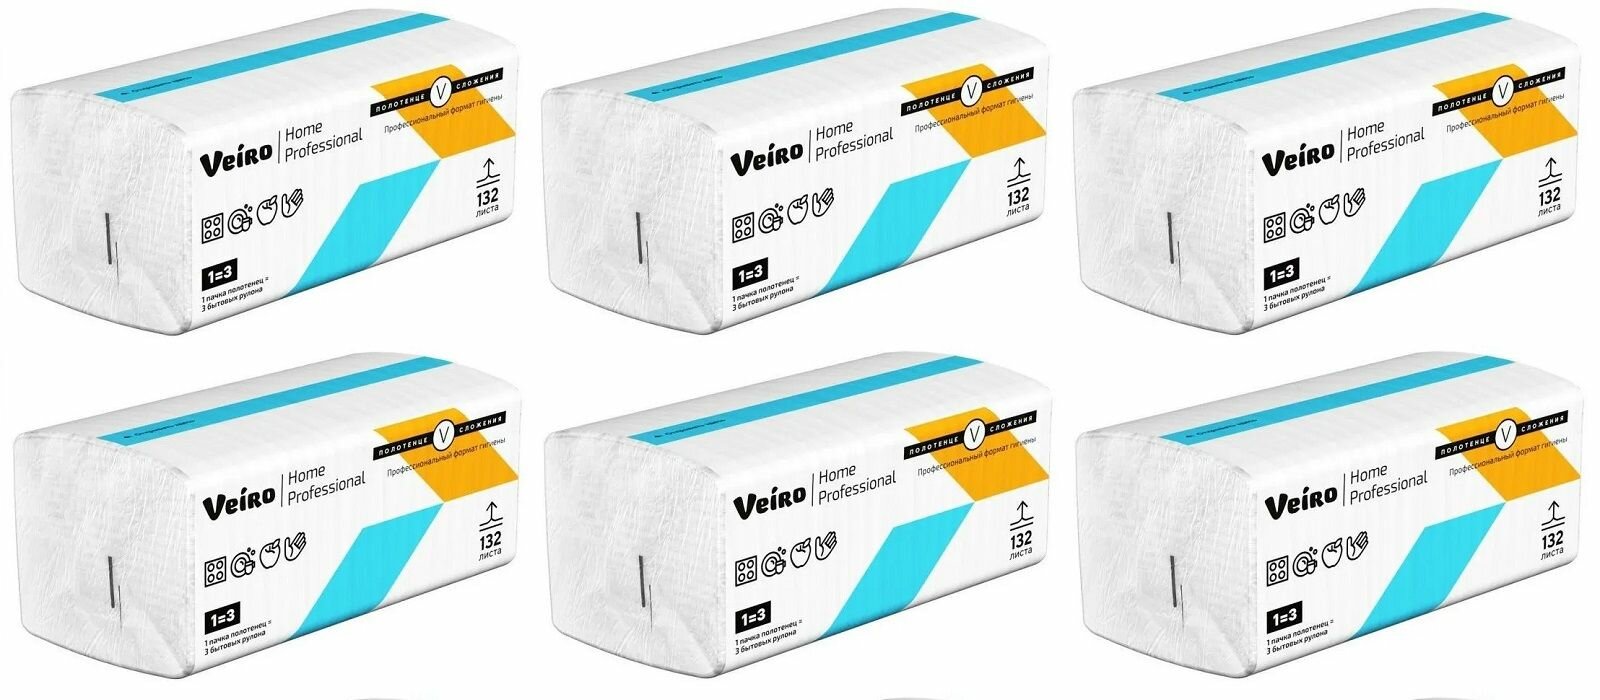 Veiro Полотенца бумажные Professional Home V - сложение 2-х слойные, 132 листа, 6 шт.